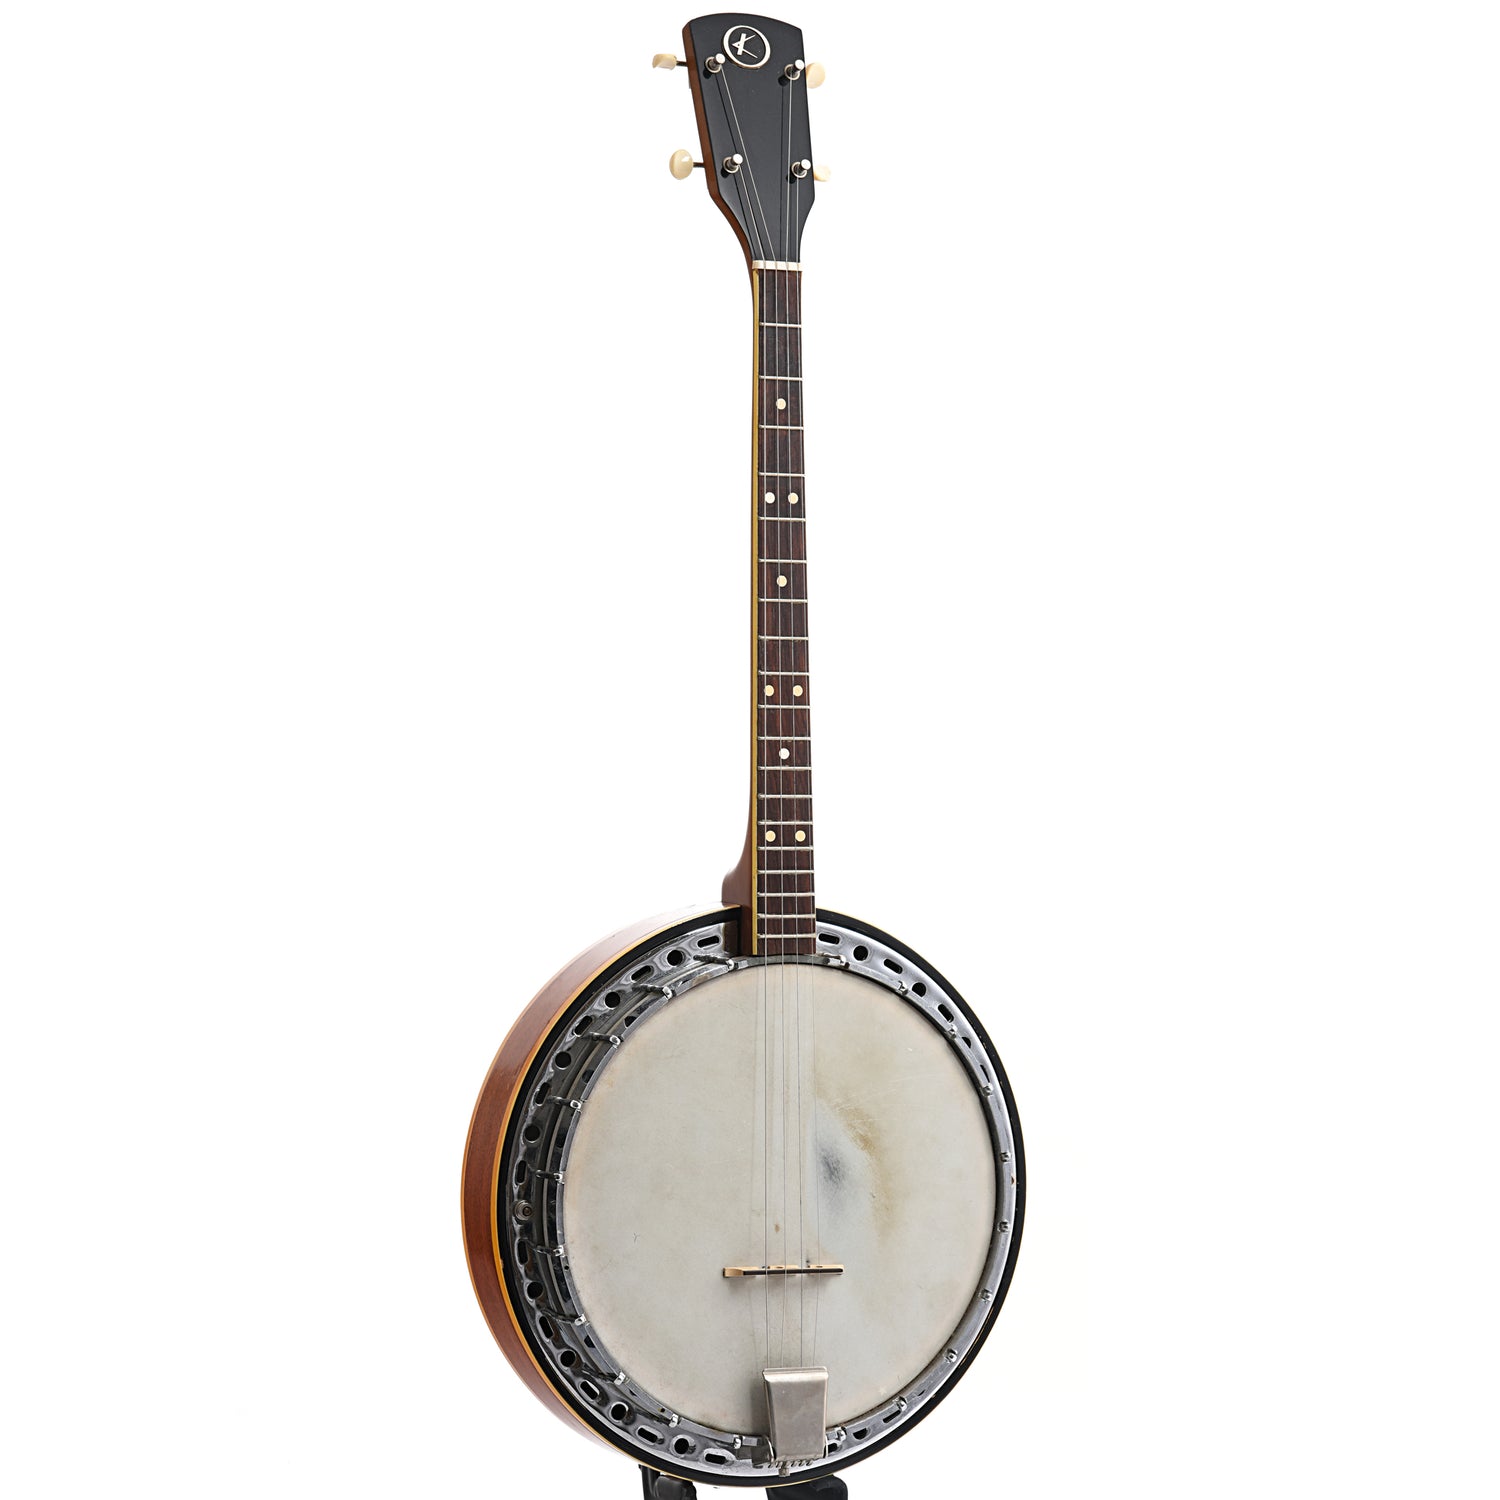 Image 3 of Kay Tenor Banjo (1950s-1960s) - SKU# 80U-208948 : Product Type Tenor & Plectrum Banjos : Elderly Instruments